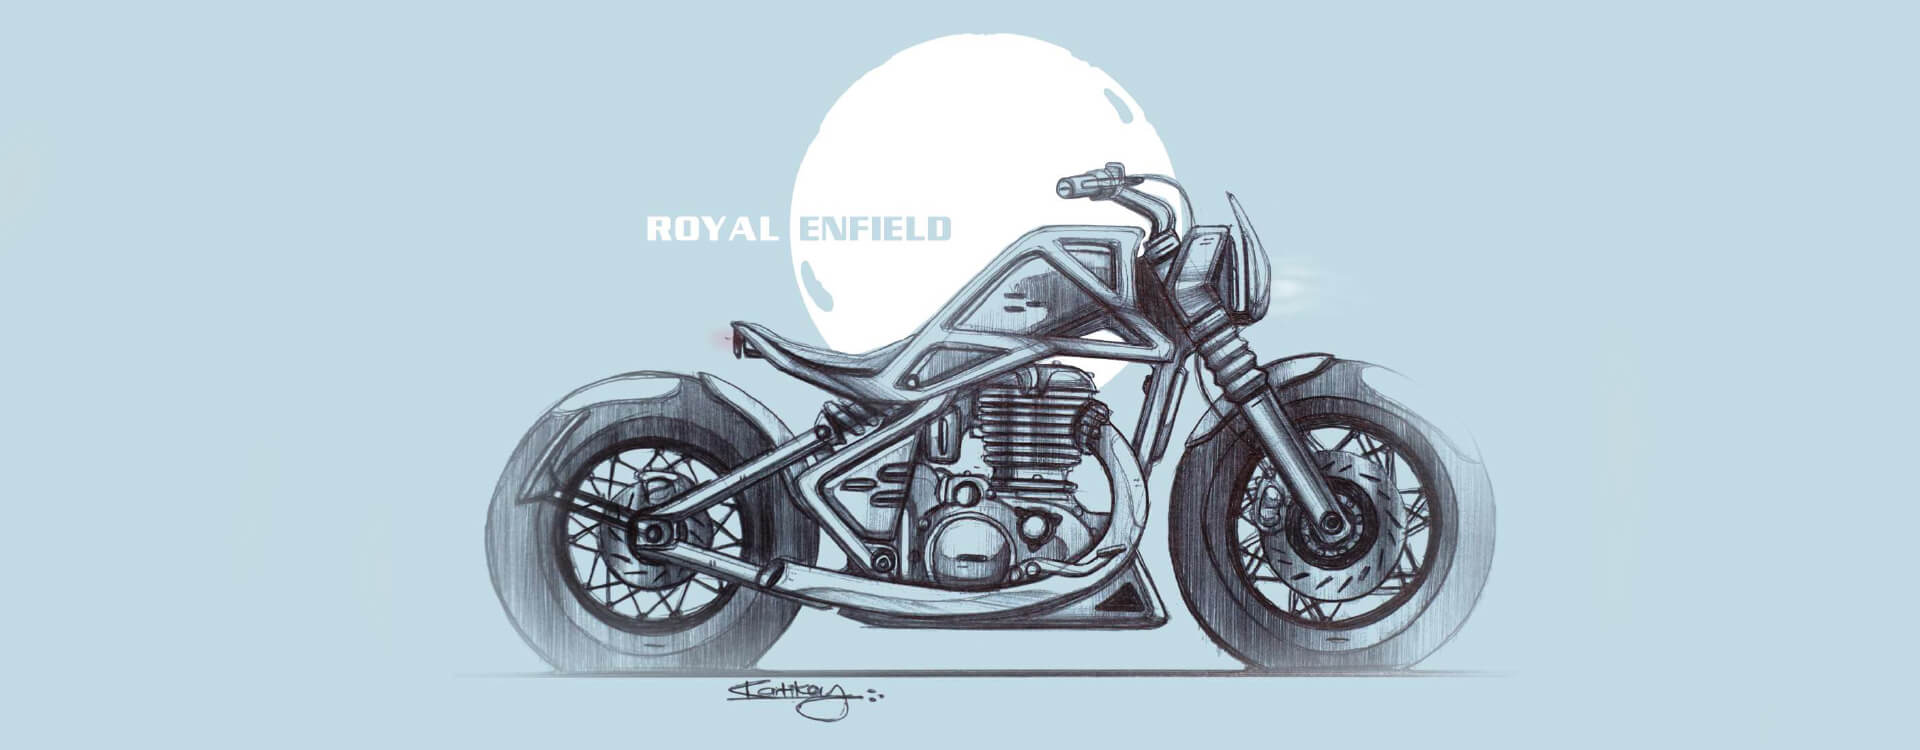 Royal Enfield (Bullet) bike drawing 🔥 - YouTube